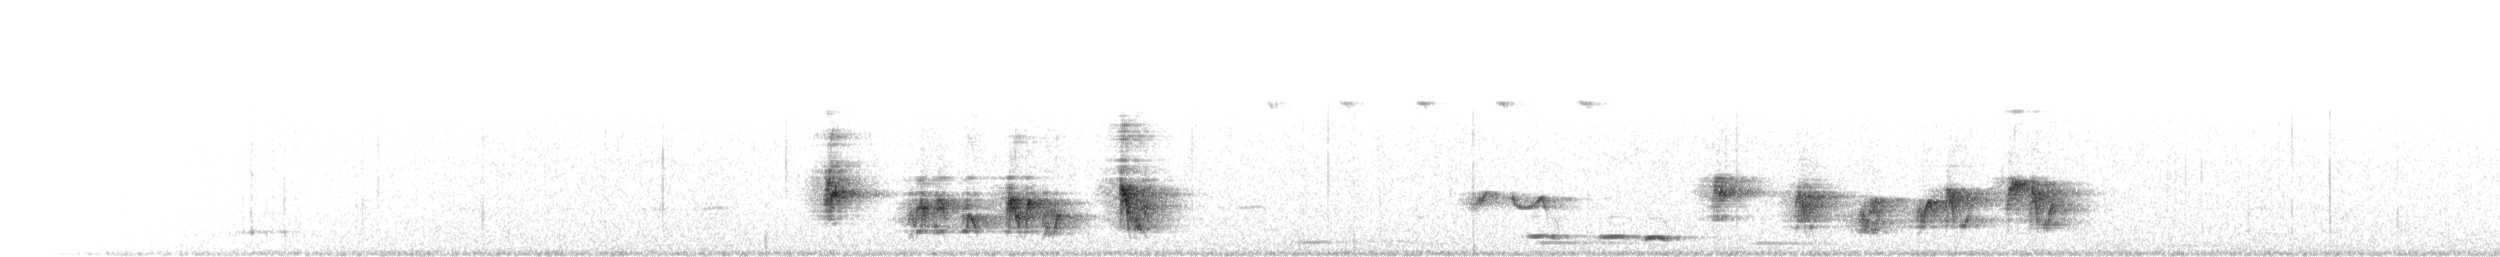 Ak Kaşlı Arapbülbülü - ML253996001